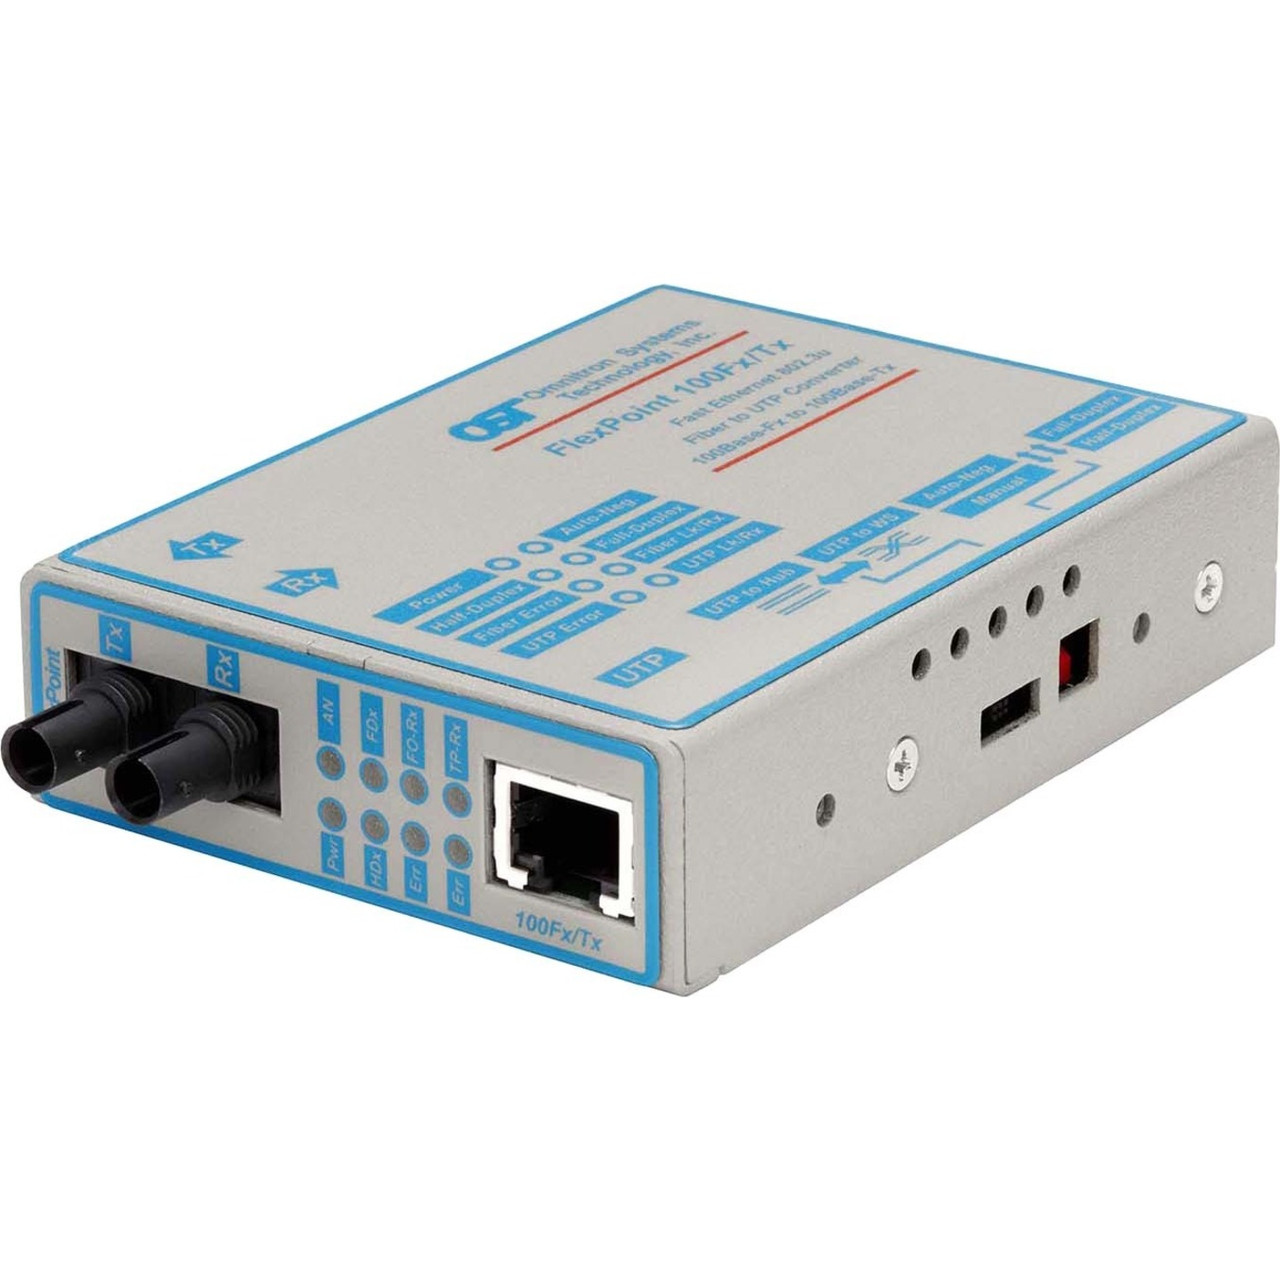 Omnitron FlexPoint 100Mbps Ethernet Fiber Media Converter RJ45 ST Single-Mode 30km - 1 x 100BASE-TX; 1 x 100BASE-LX; US No Power Adapter; Lifetime Warranty 100FX ST SM 1310 30KM NO PWR SUPPLY